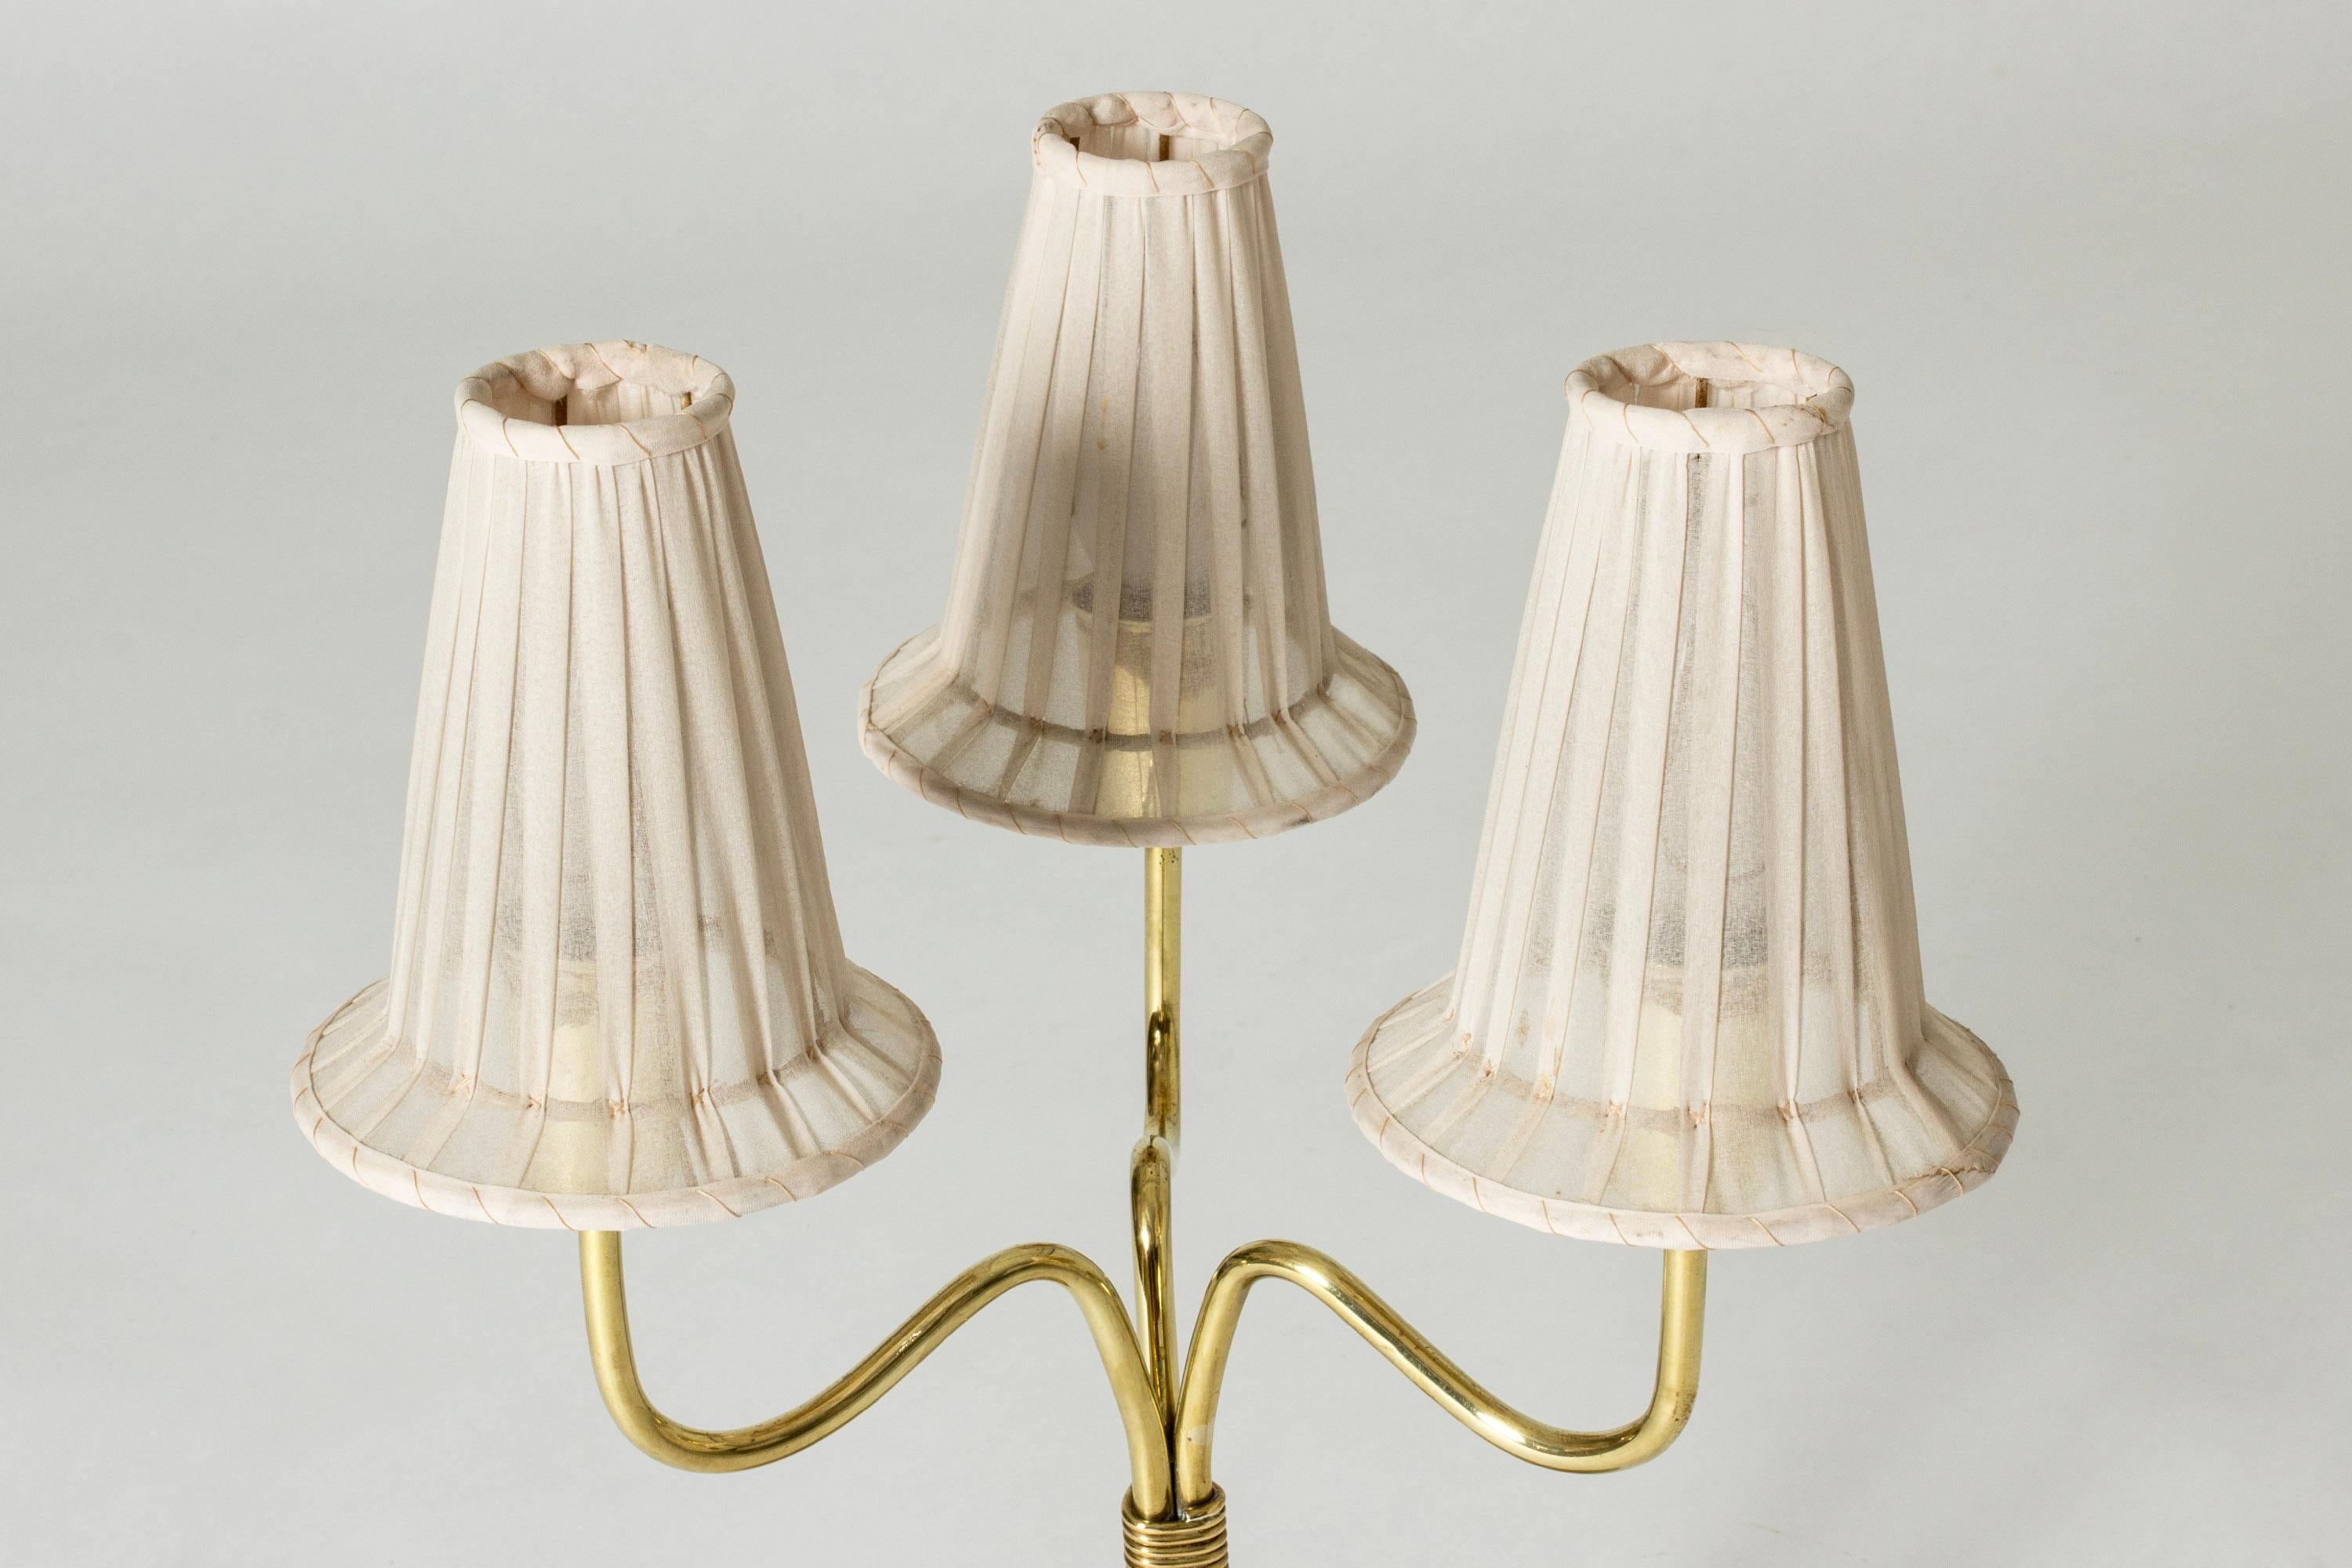 Swedish Scandinavian Modern Table Lamp, Hans Bergström, Ateljé Lyktan, Sweden, 1940s For Sale